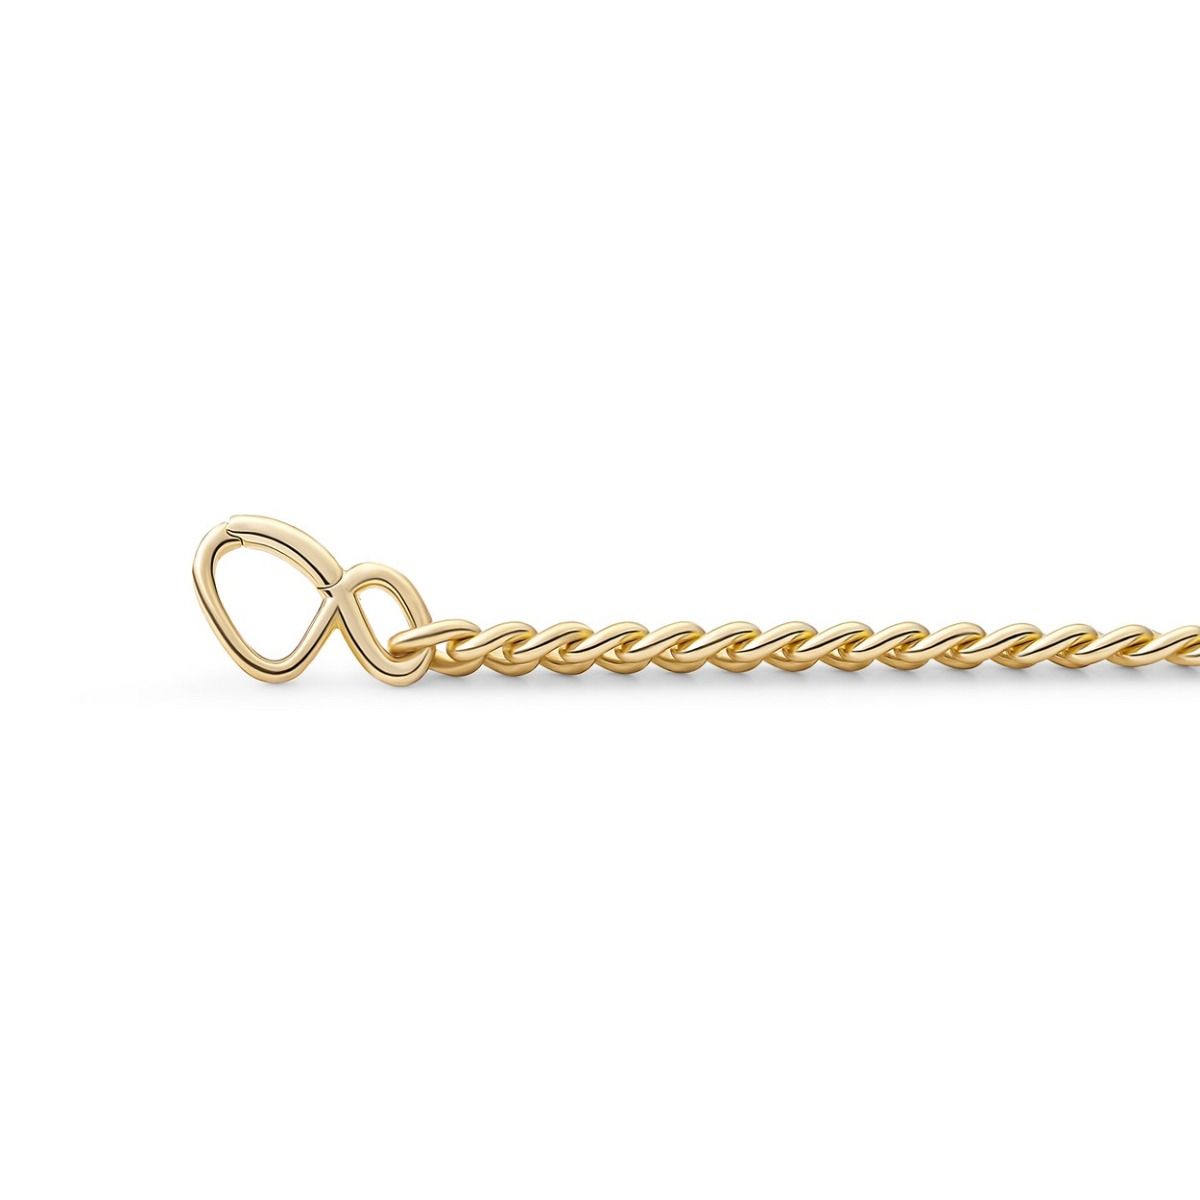 Sparkling Jewels armband Curb chain gold plated - Silver LK-CBG, exclusief en kwalitatief hoogwaardig. Ontdek nu!